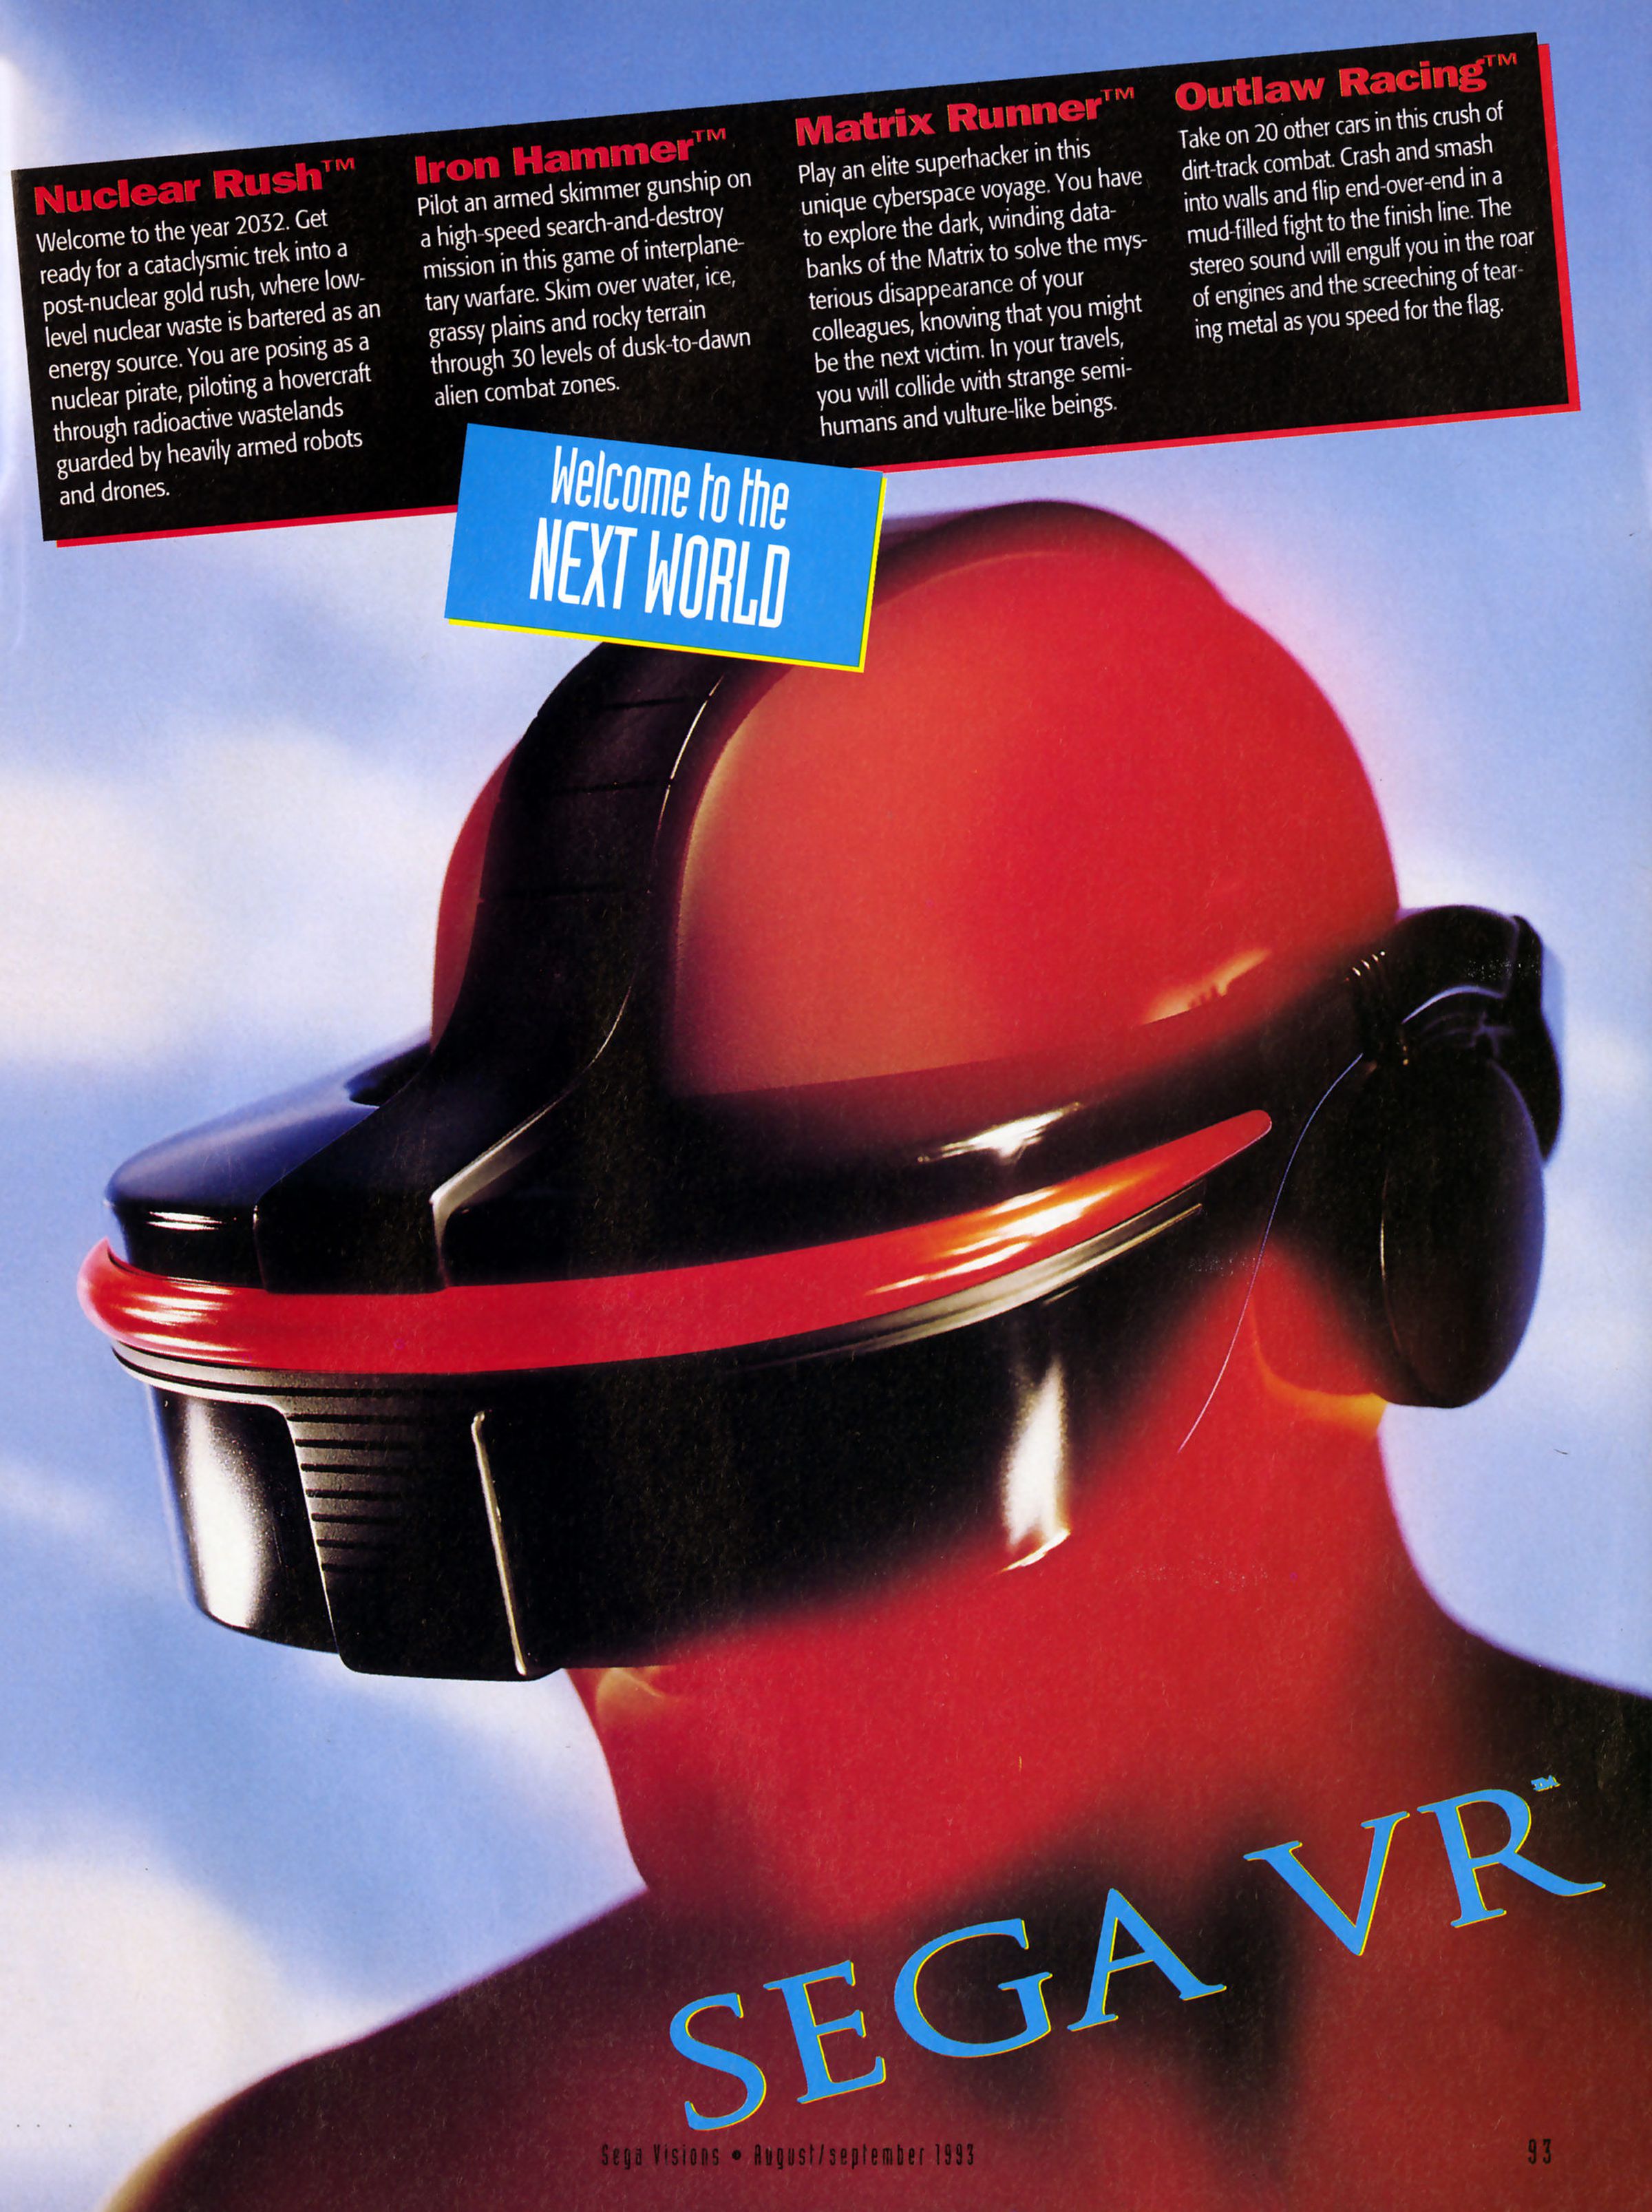 The Sega VR helmet, as it appeared in the August / September 1993 edition of Sega Visions magazine.